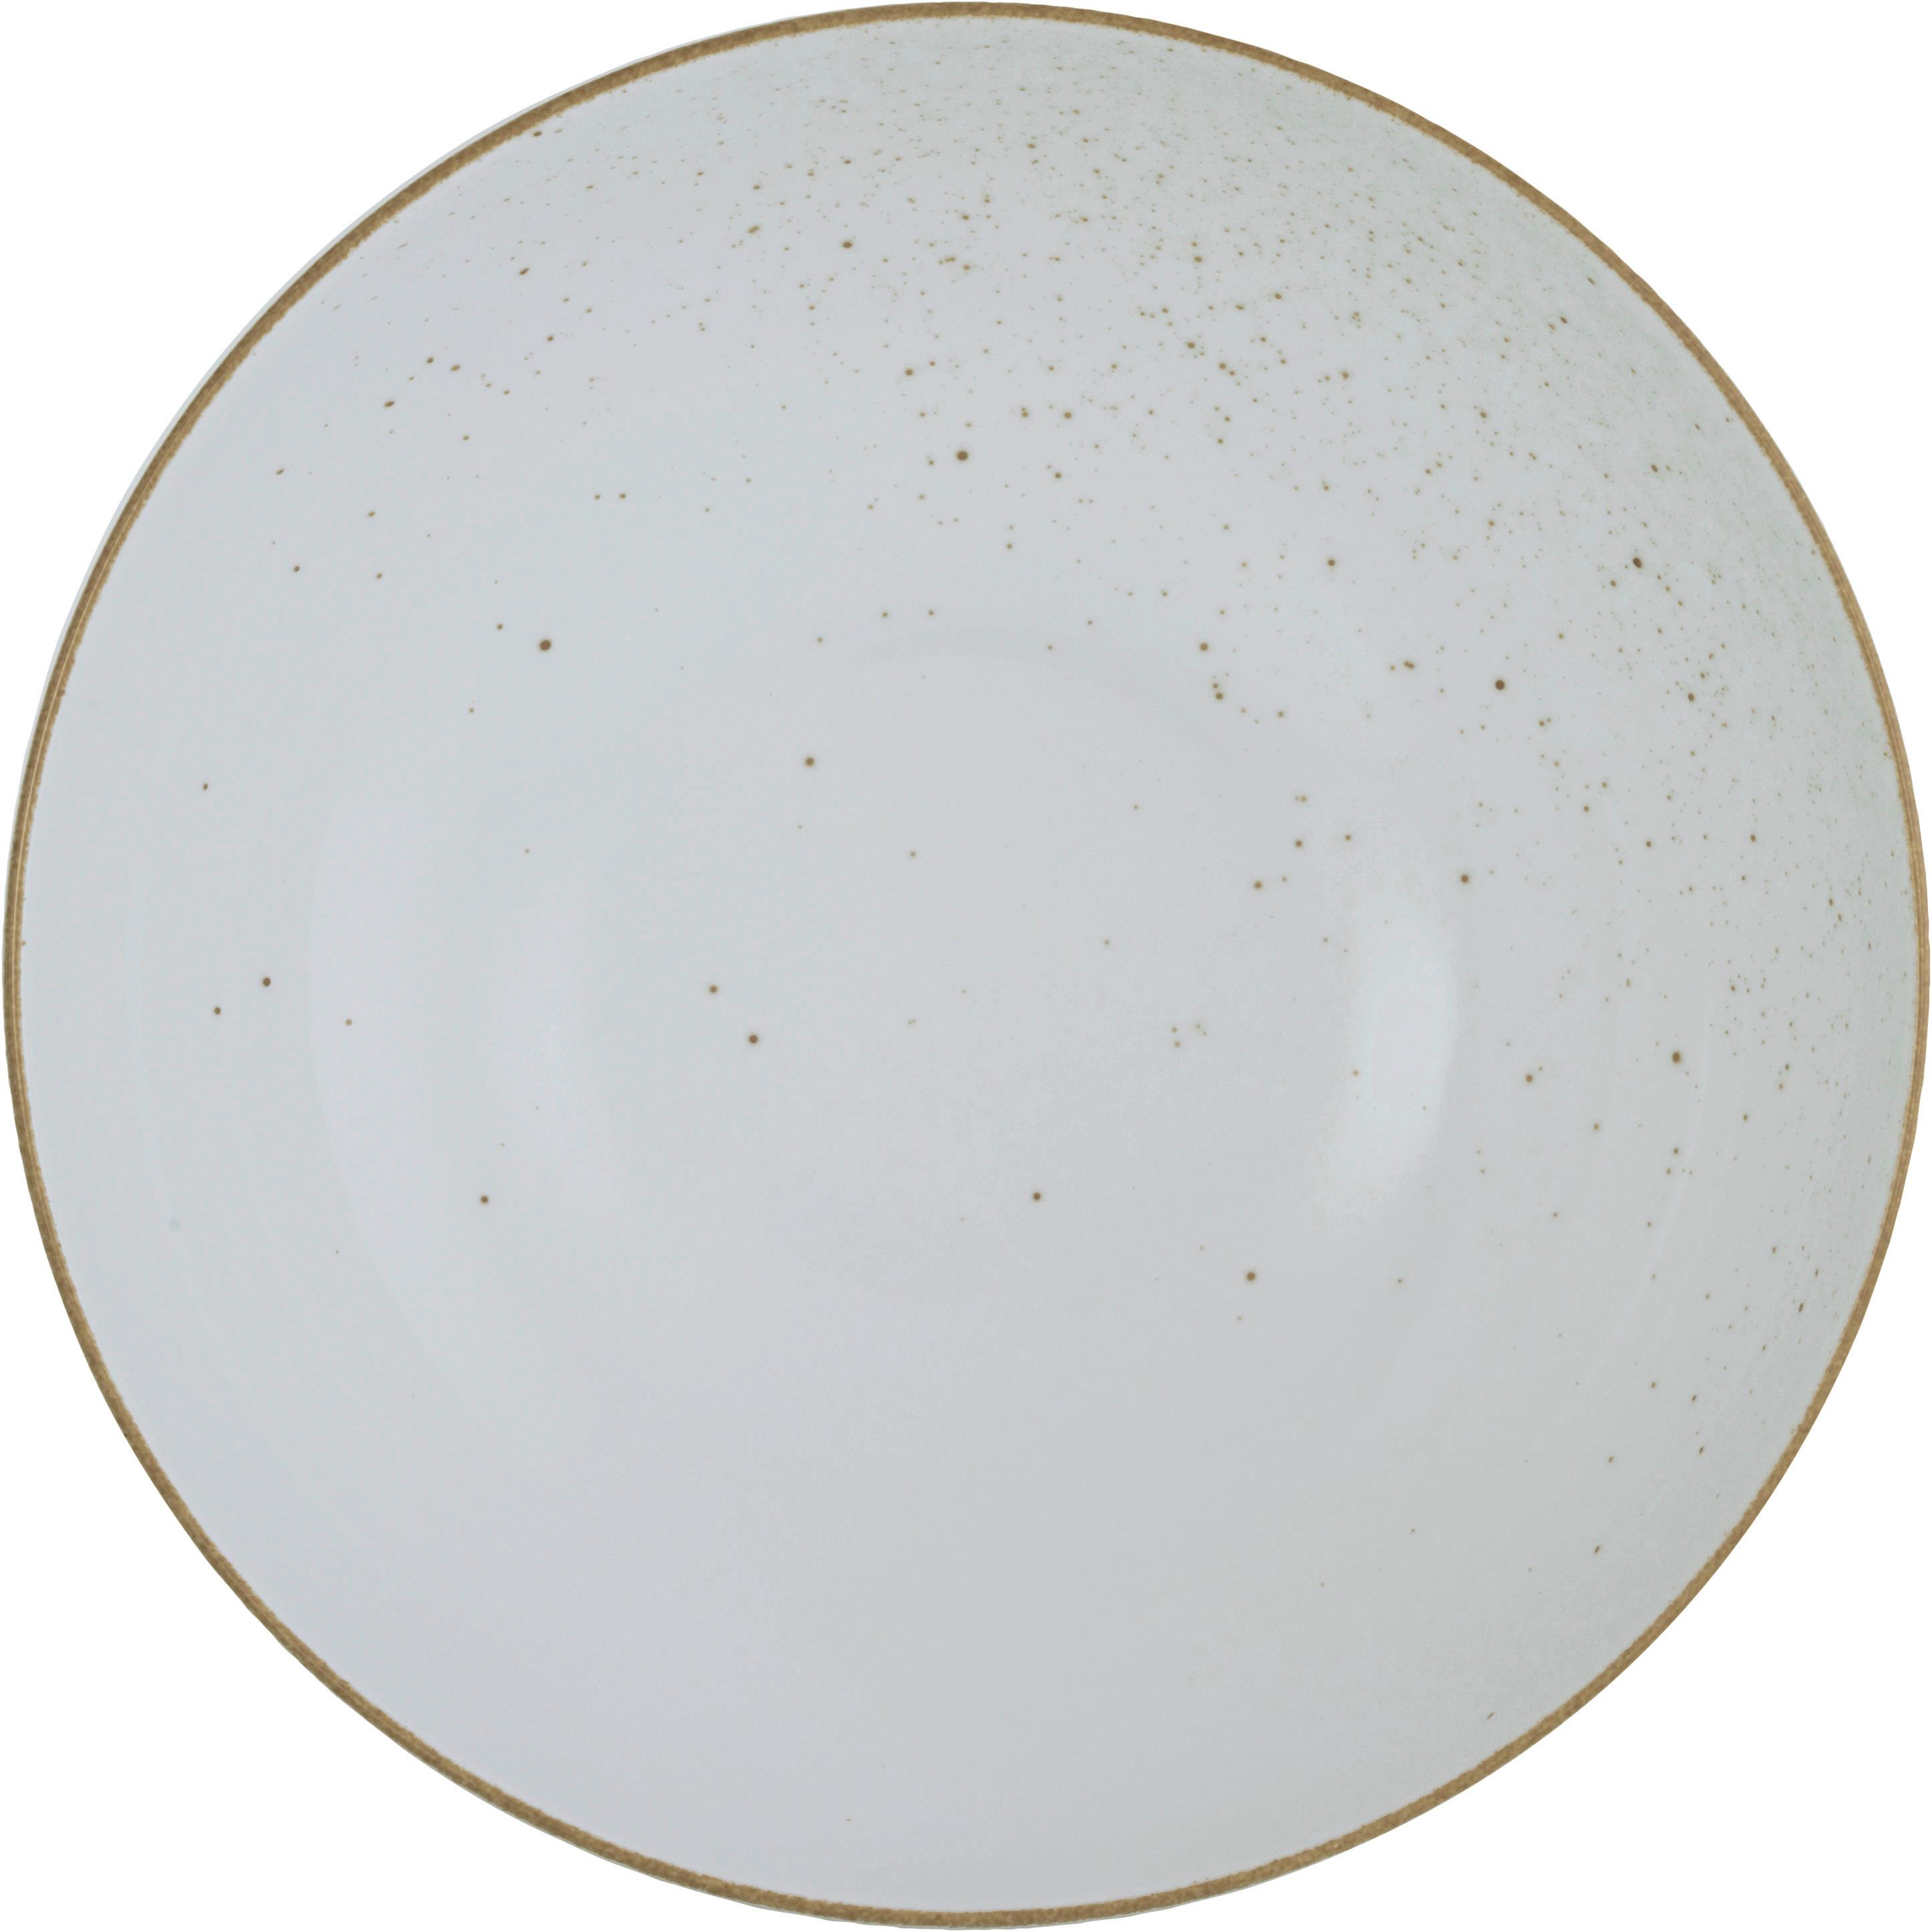 Skleda Za Solato Capri - bela, Moderno, keramika (25/25/8cm) - Premium Living